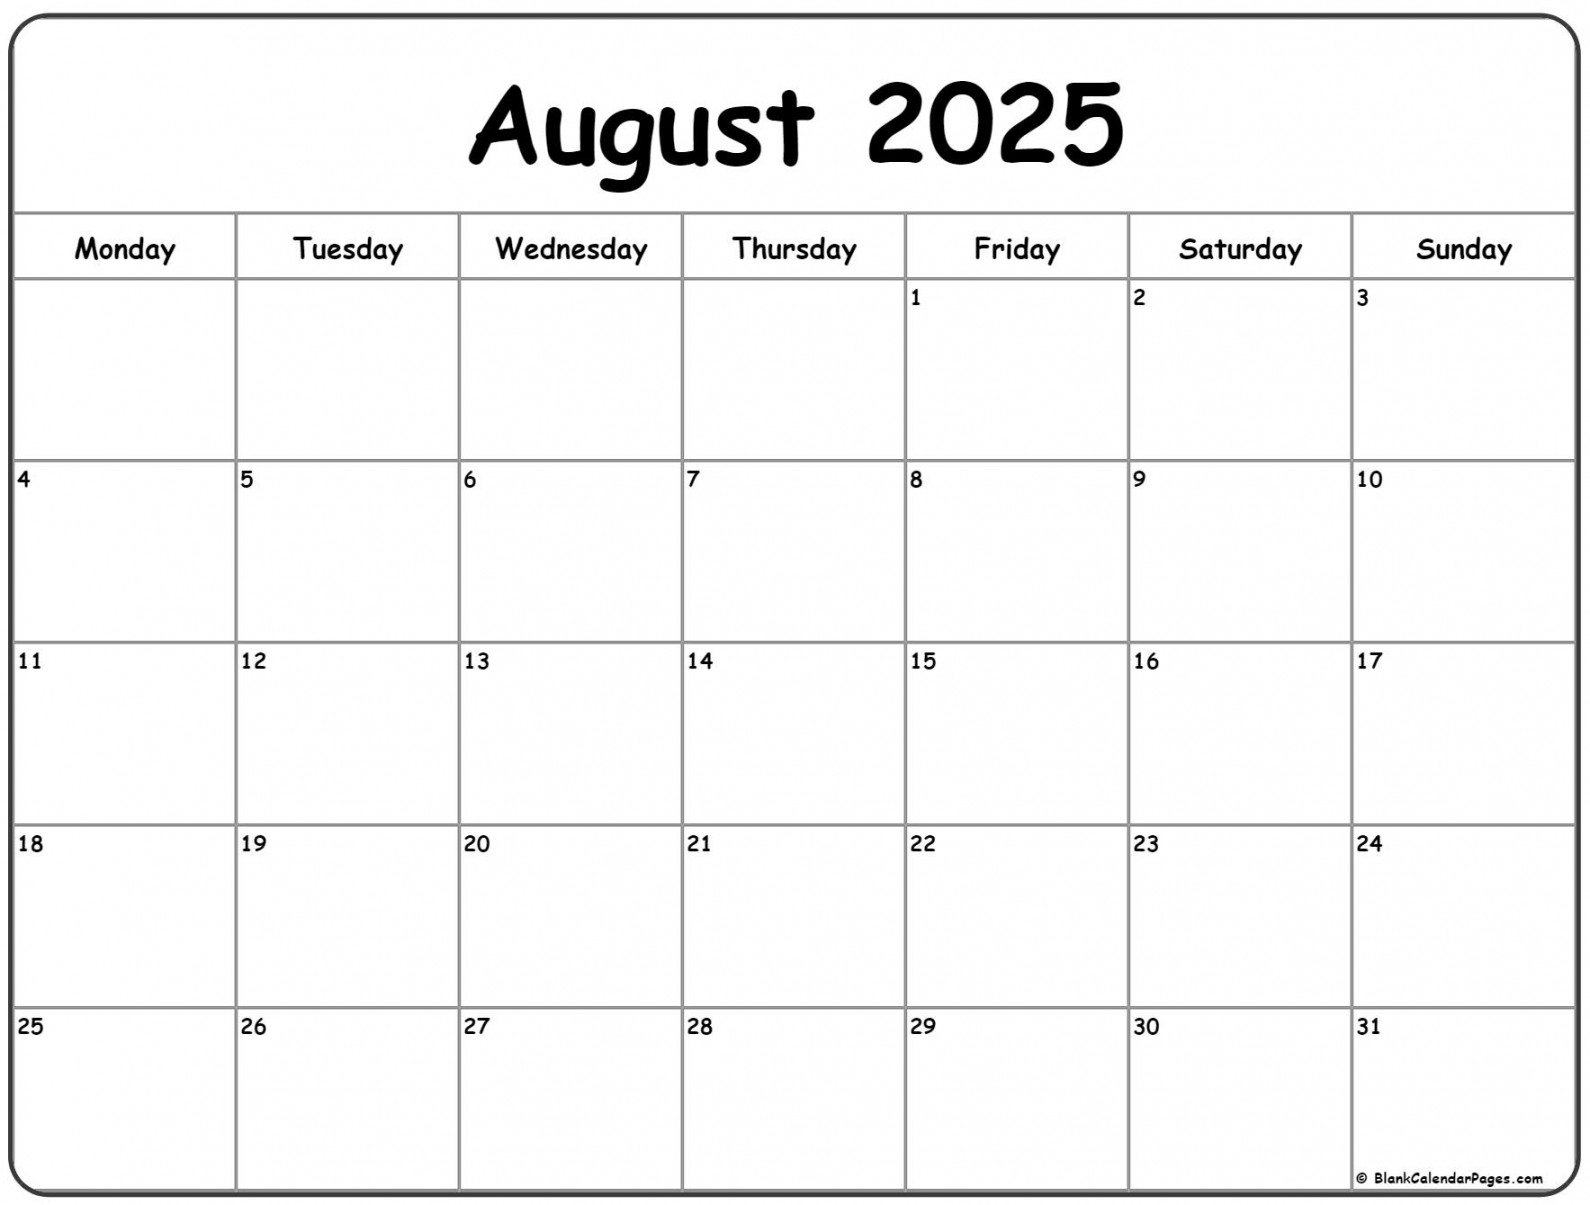 august monday calendar monday to sunday